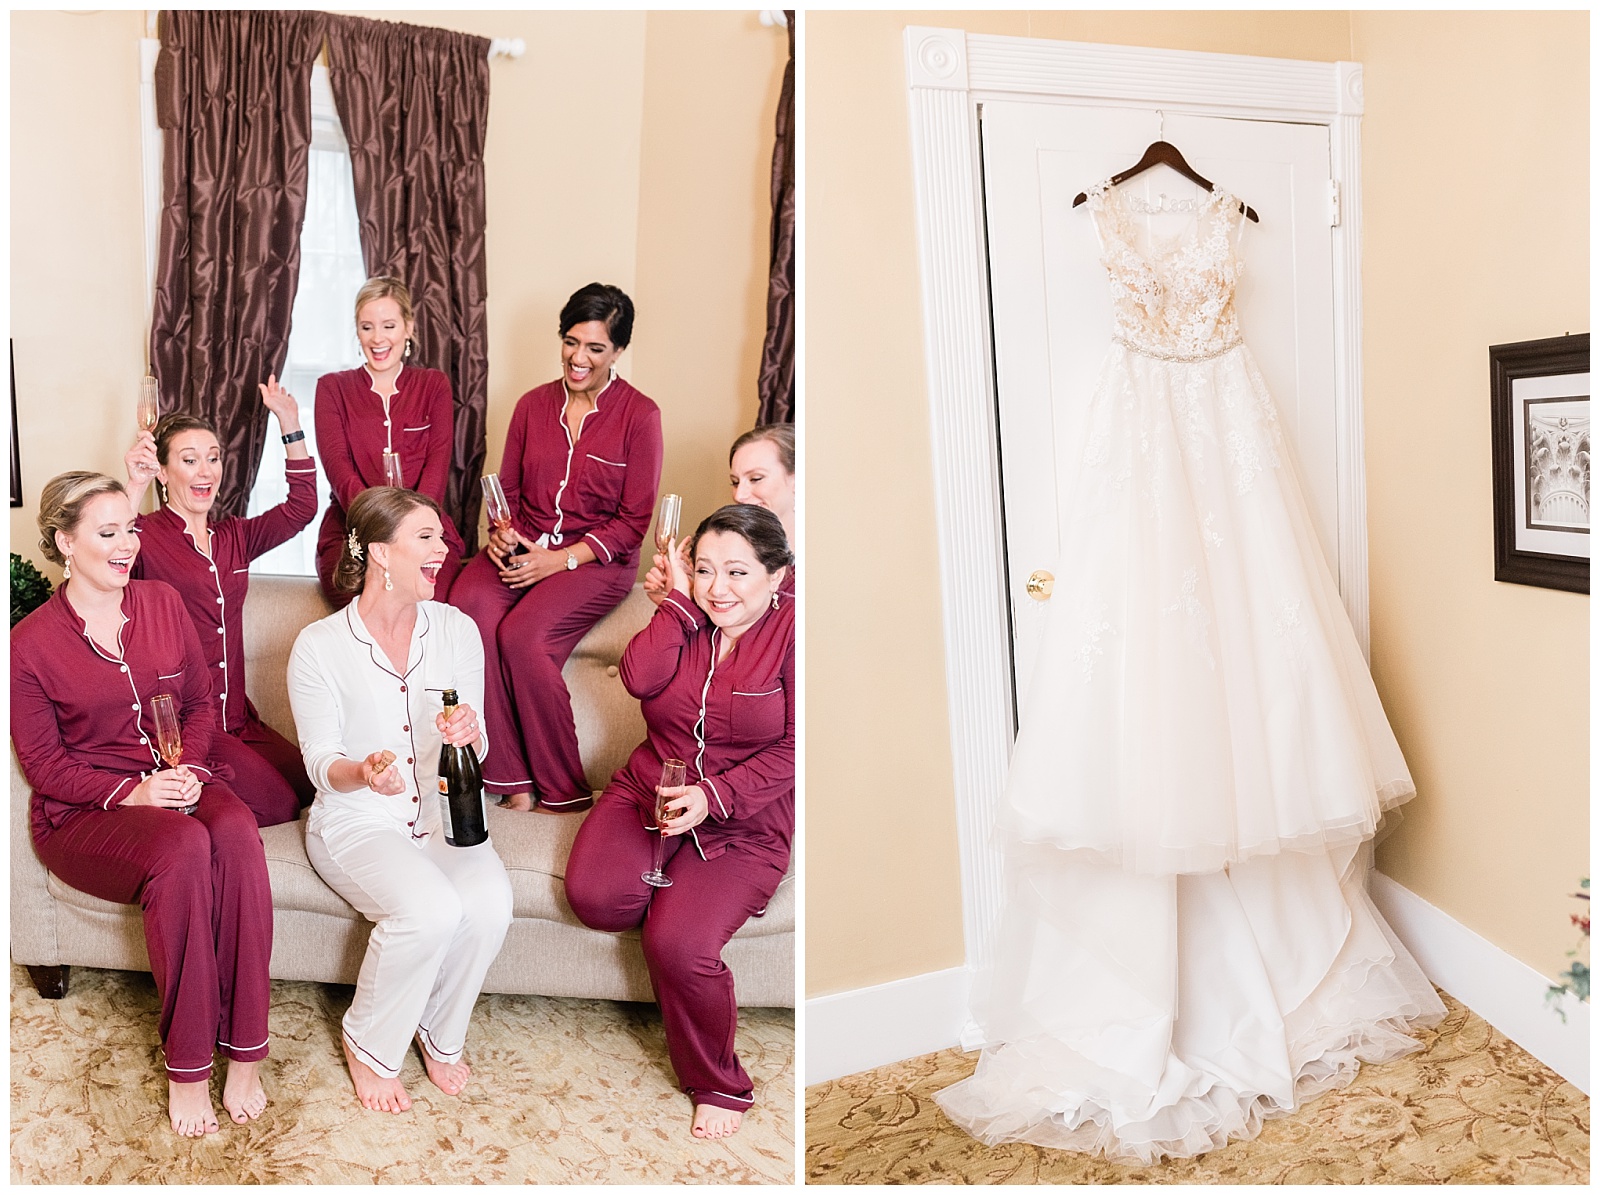 Bride Preparation,Bridesmaids,Details,NJ,New Jersey,The Ryland Inn,Twisted Willow,Wedding,Wedding Photographer,Winter,